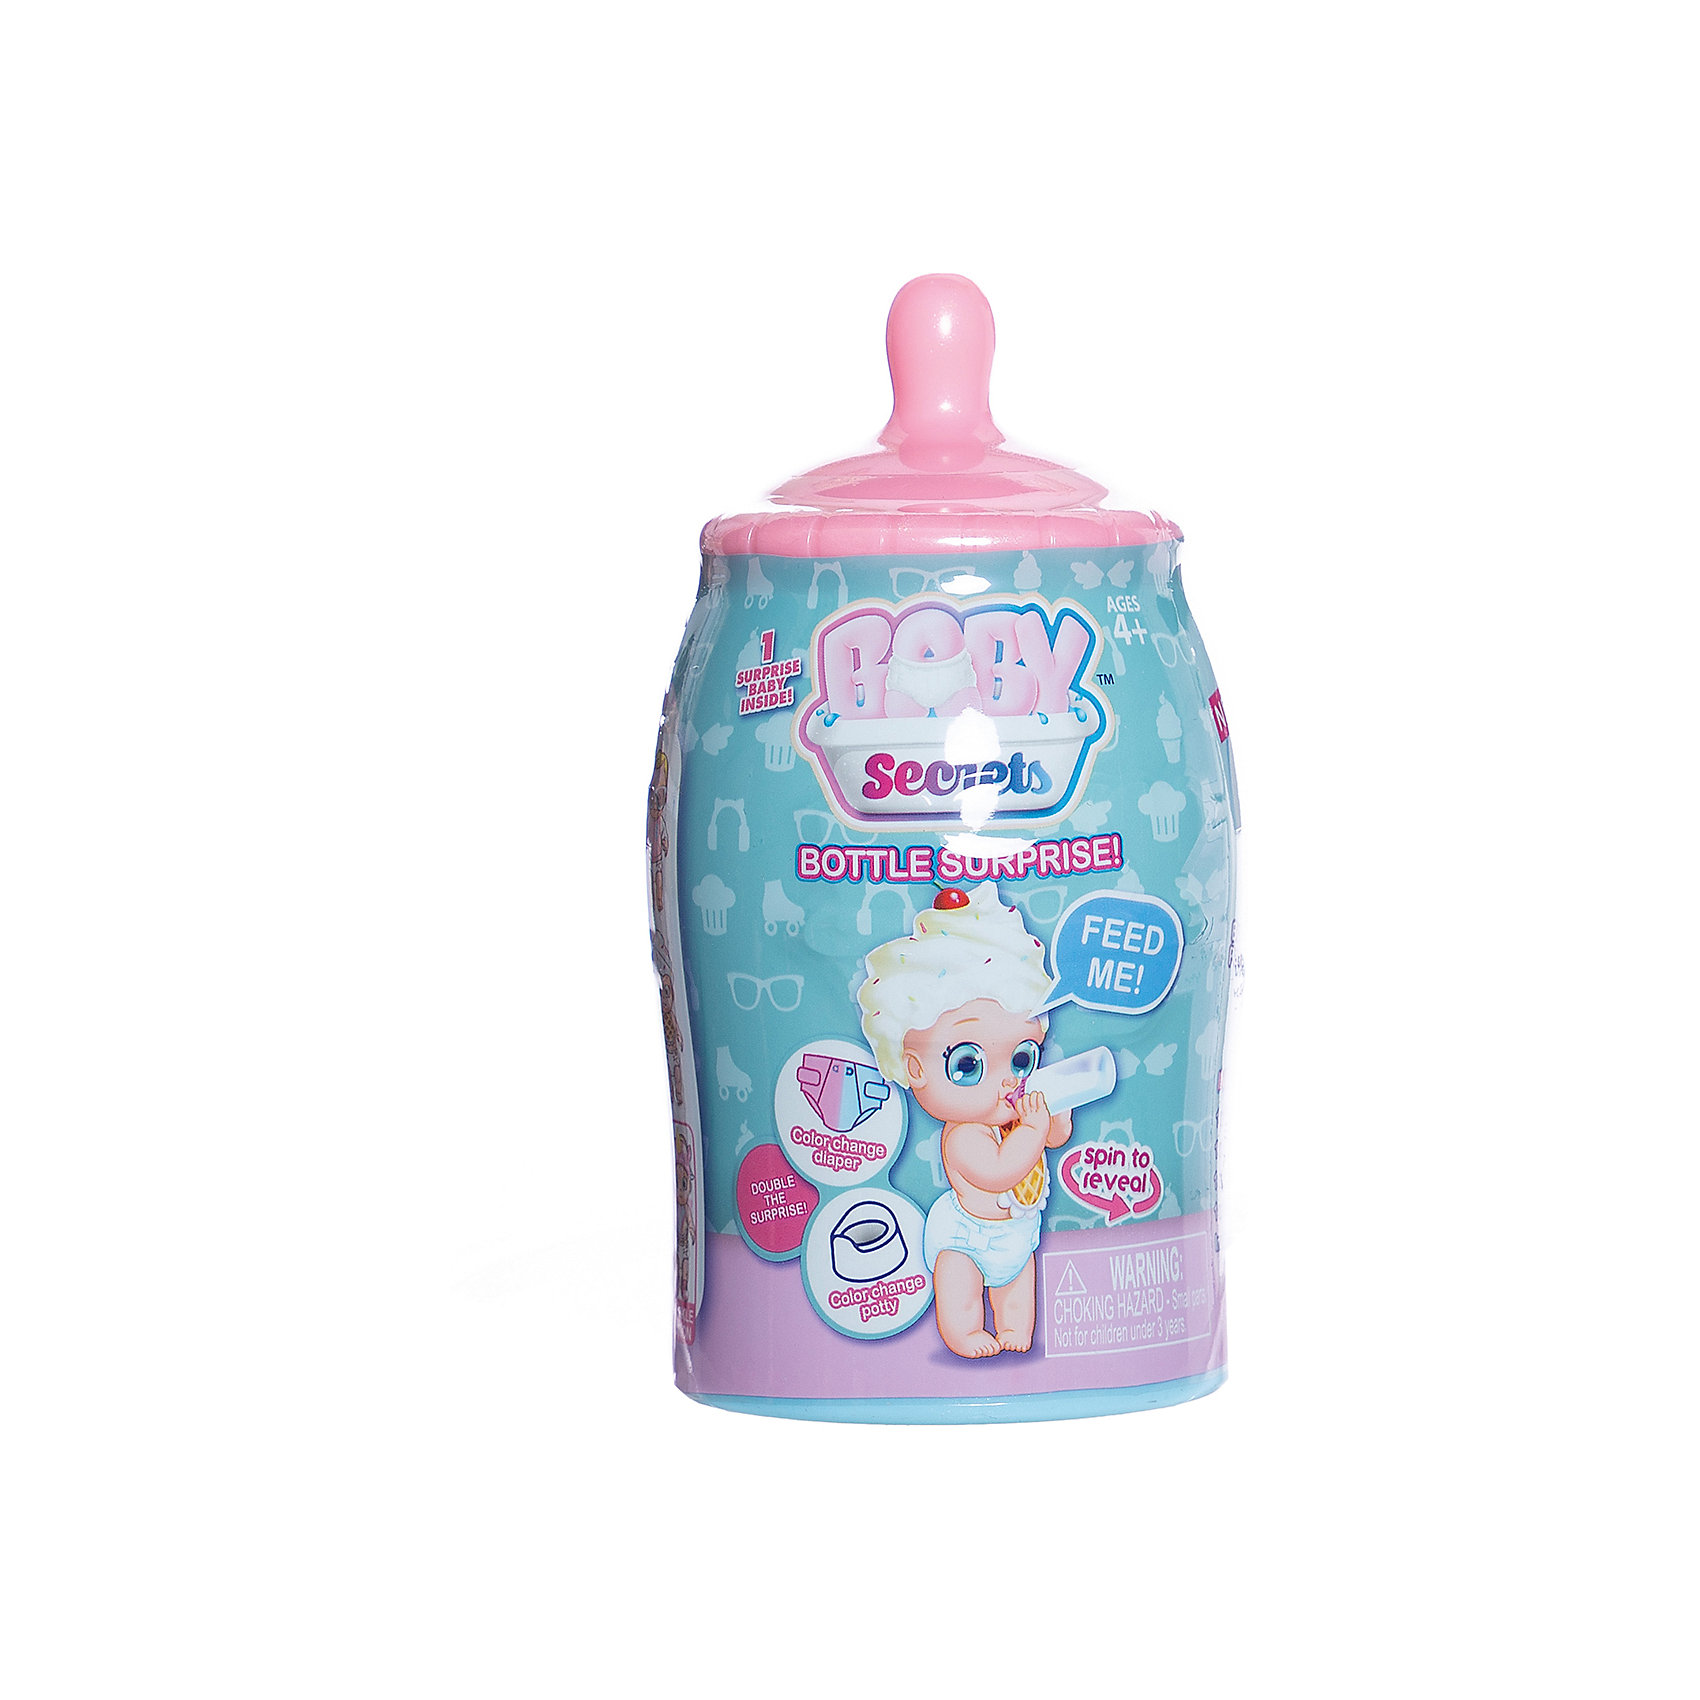 Мини-кукла Baby Secrets Bottle Surprise, в бутылочке ABtoys 13634115